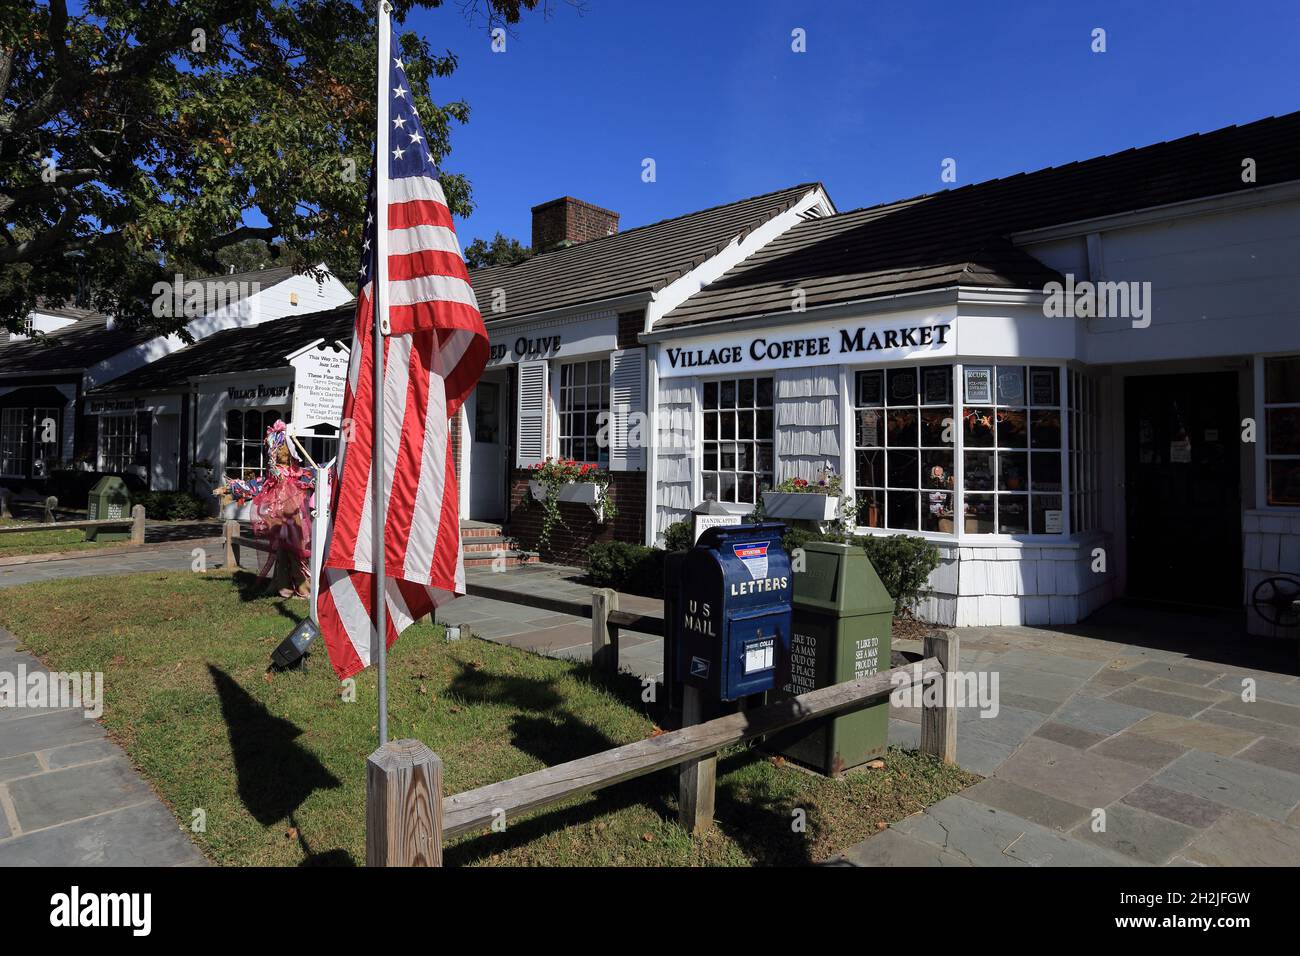 Stony Brook Village Long Island New York Stockfoto